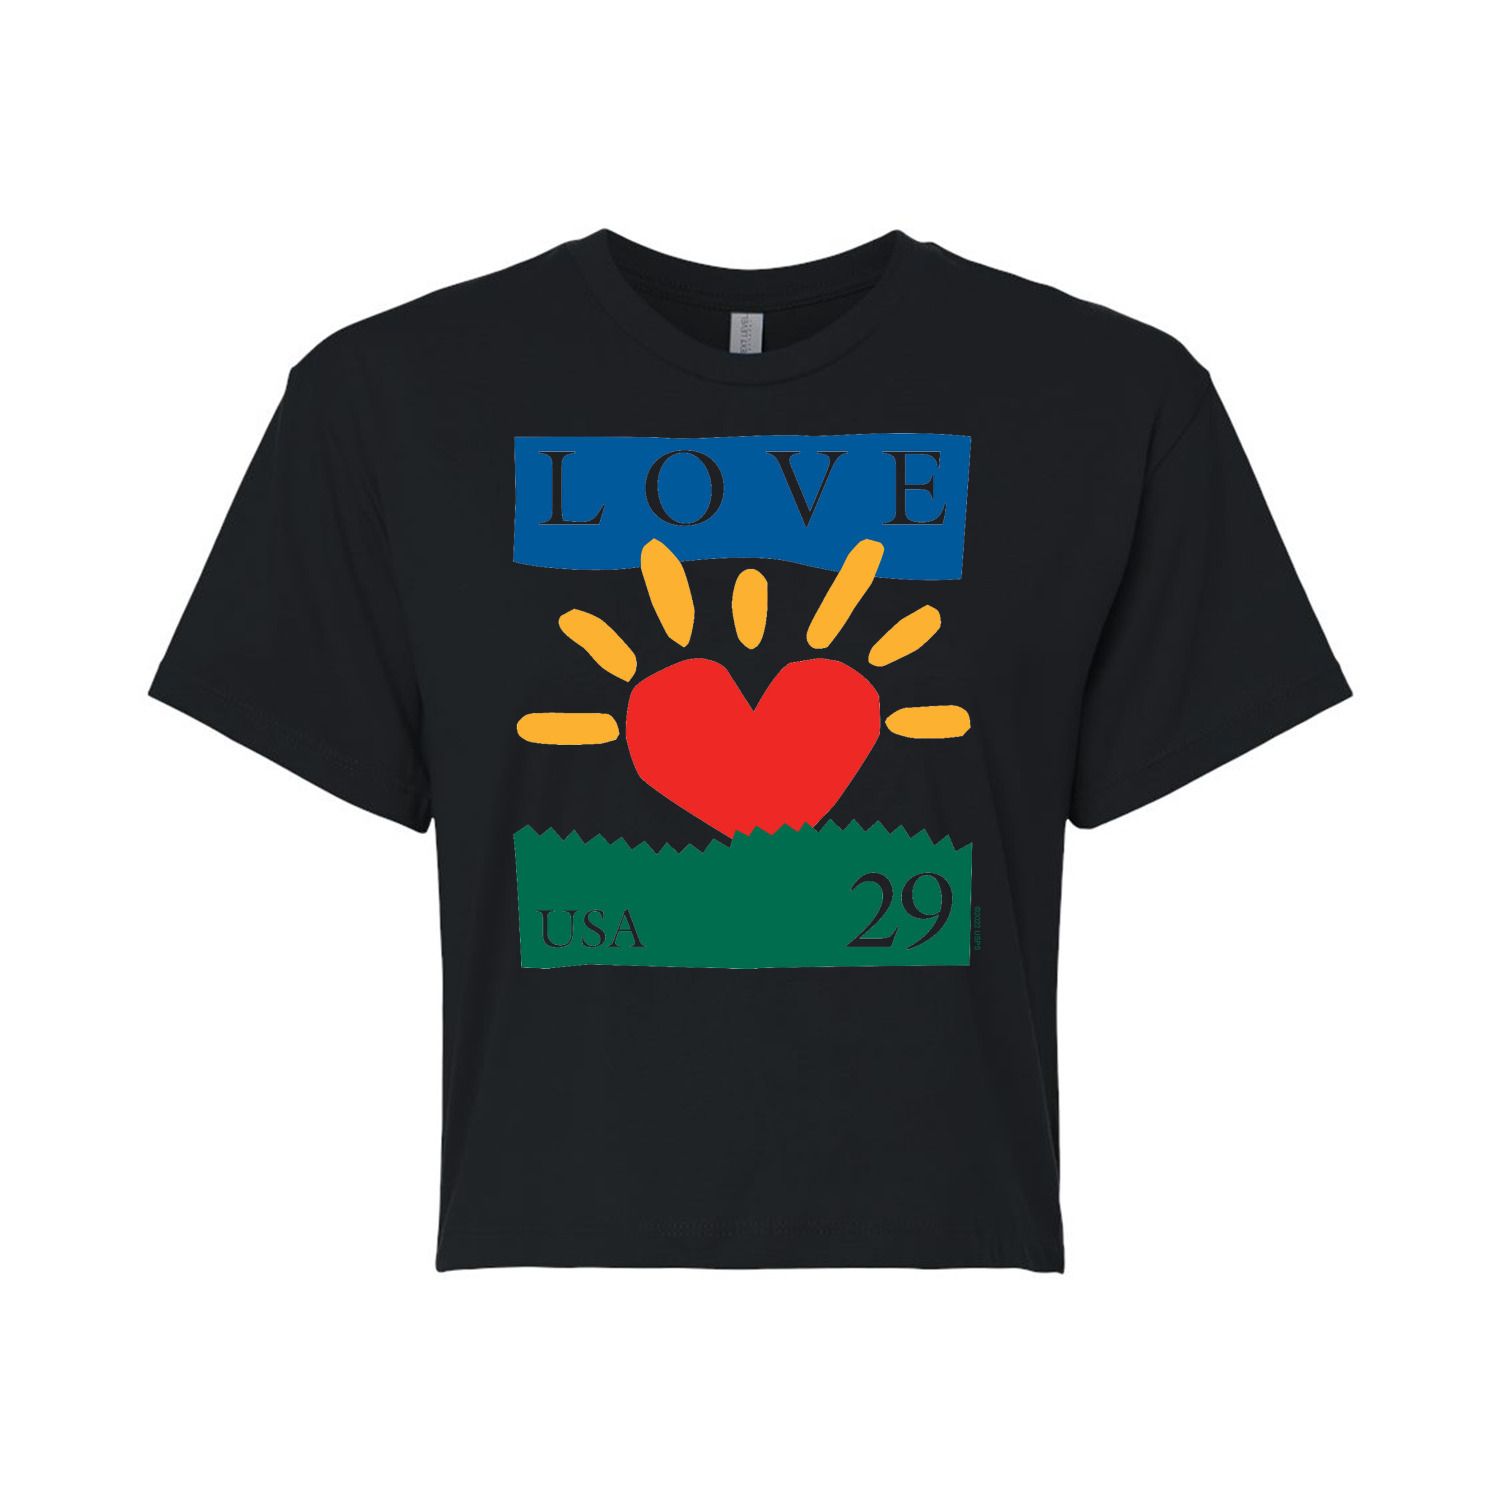 Укороченная футболка USPS Heart Love 29 для юниоров Licensed Character, черный укороченная худи usps love heart stamp для юниоров licensed character